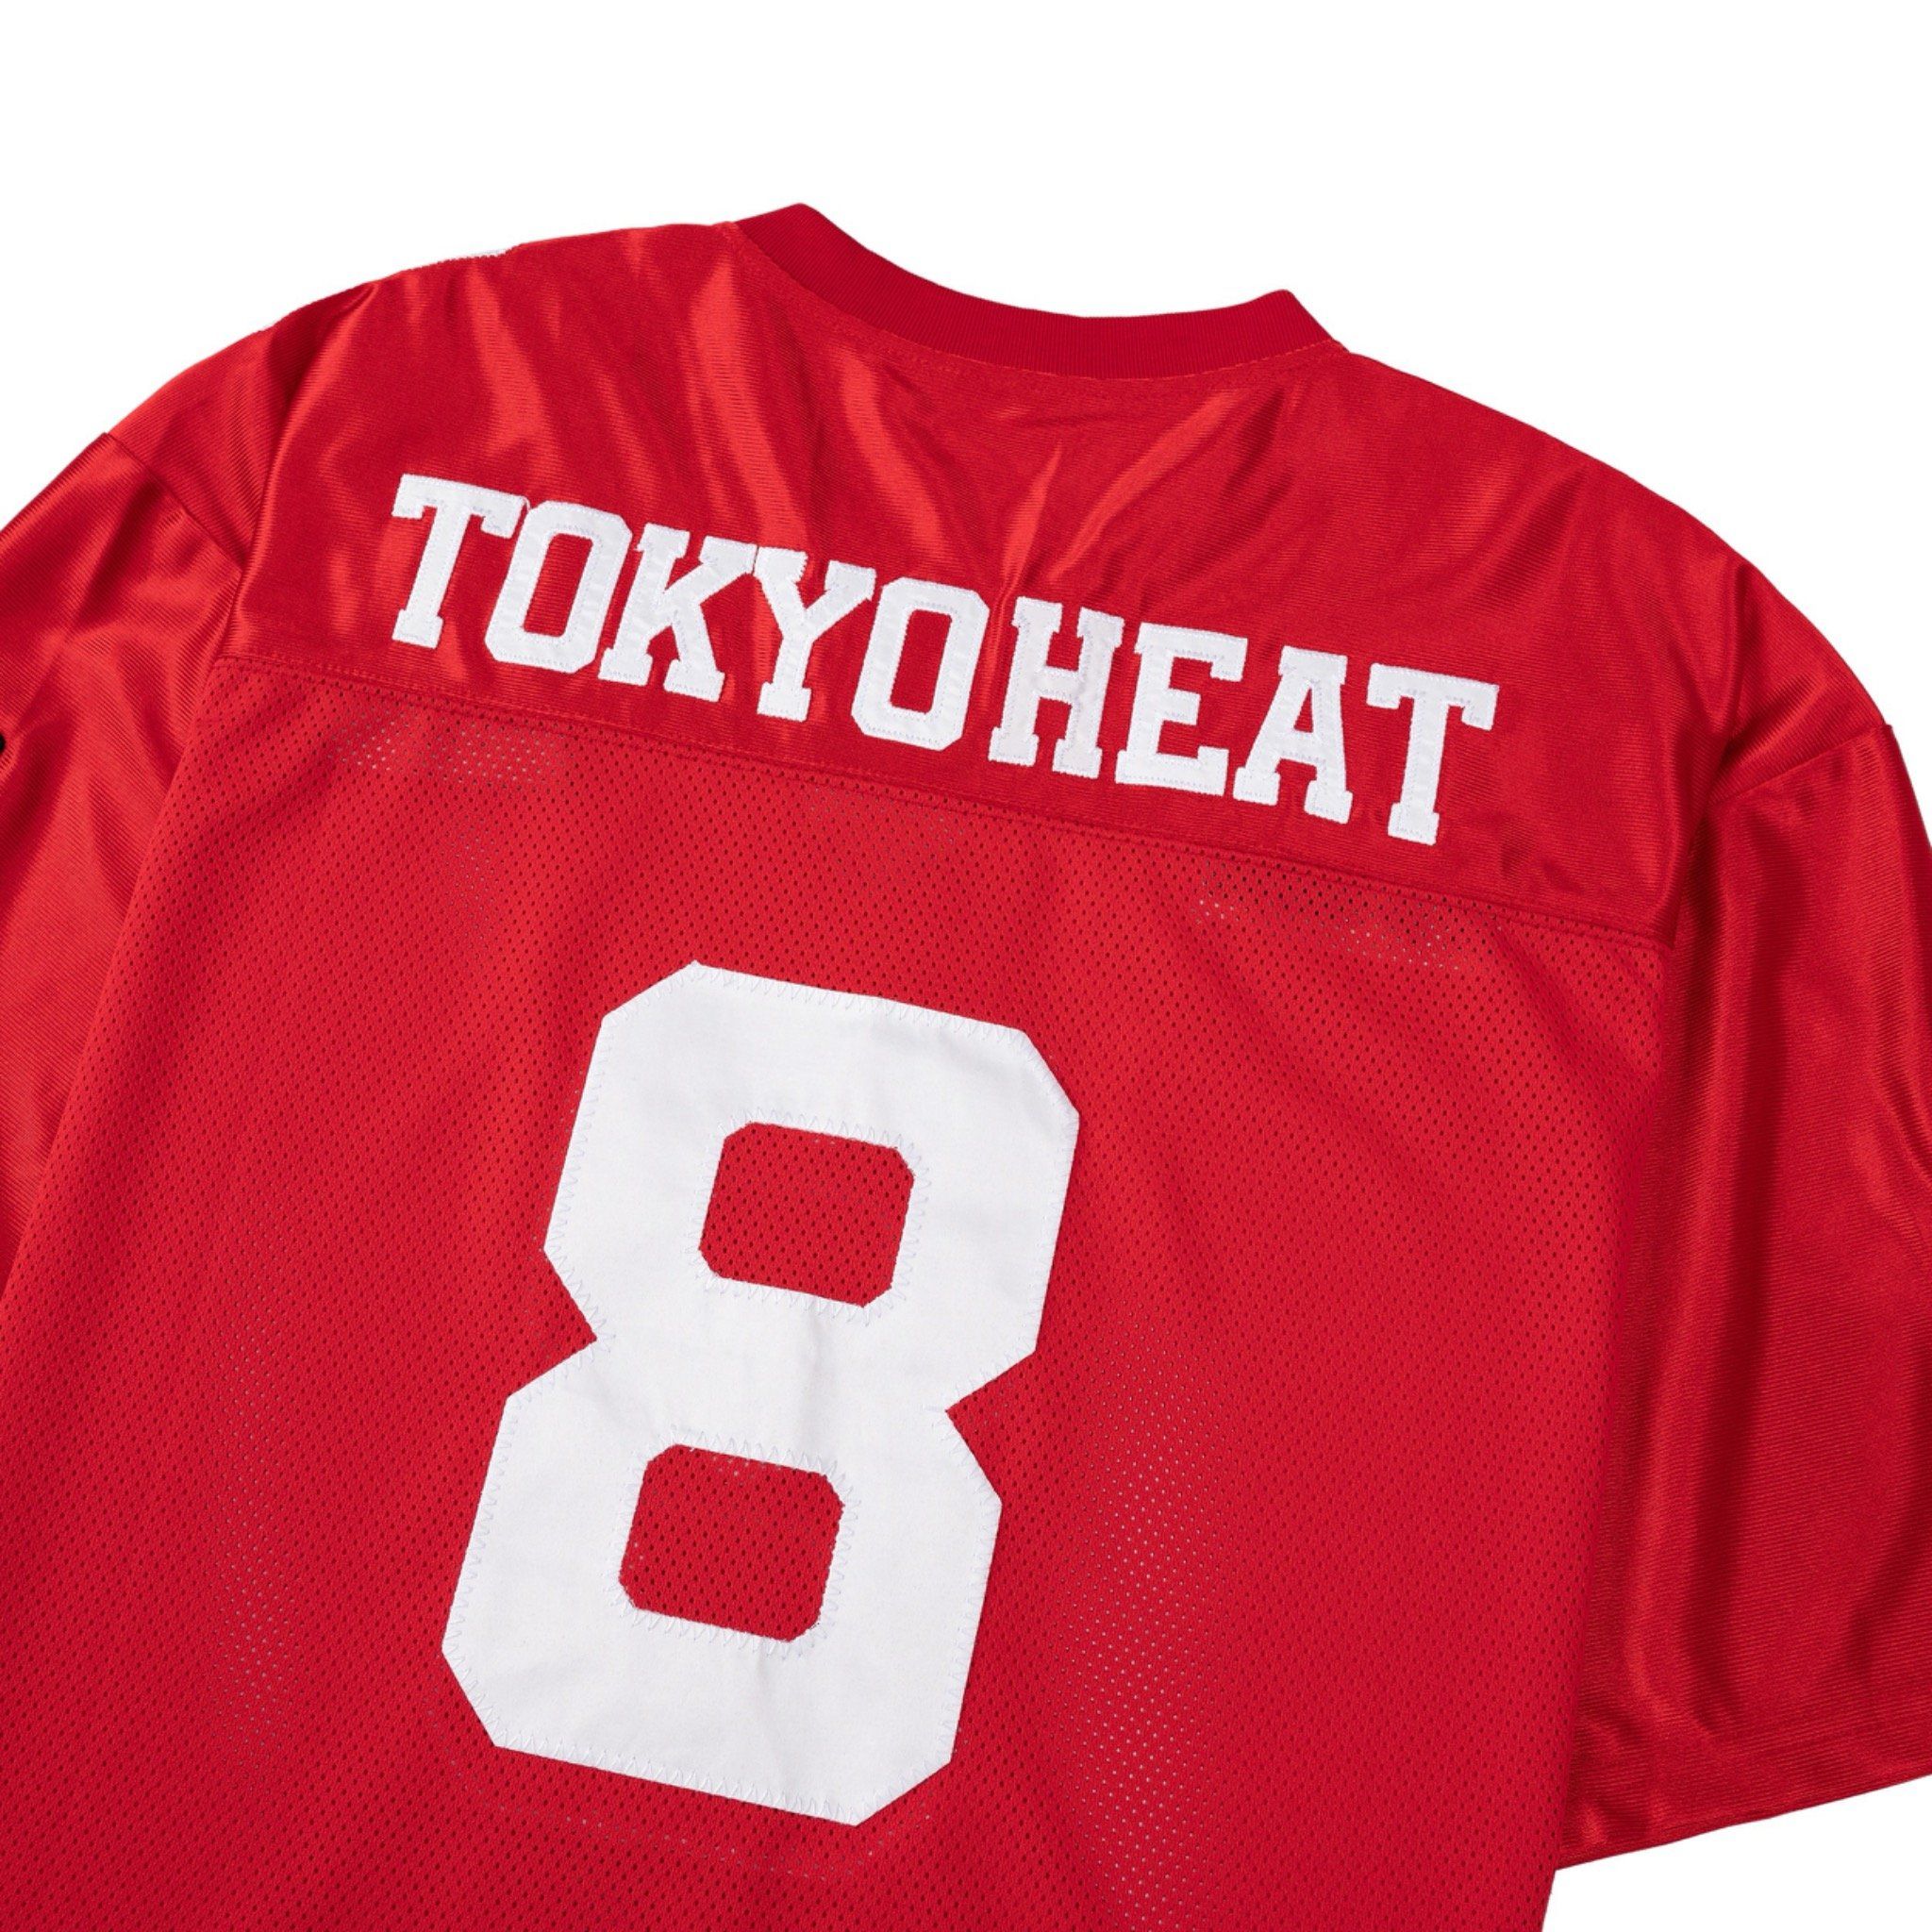  Tokyo Heat Jersey 8 Ball Pool (Red) 